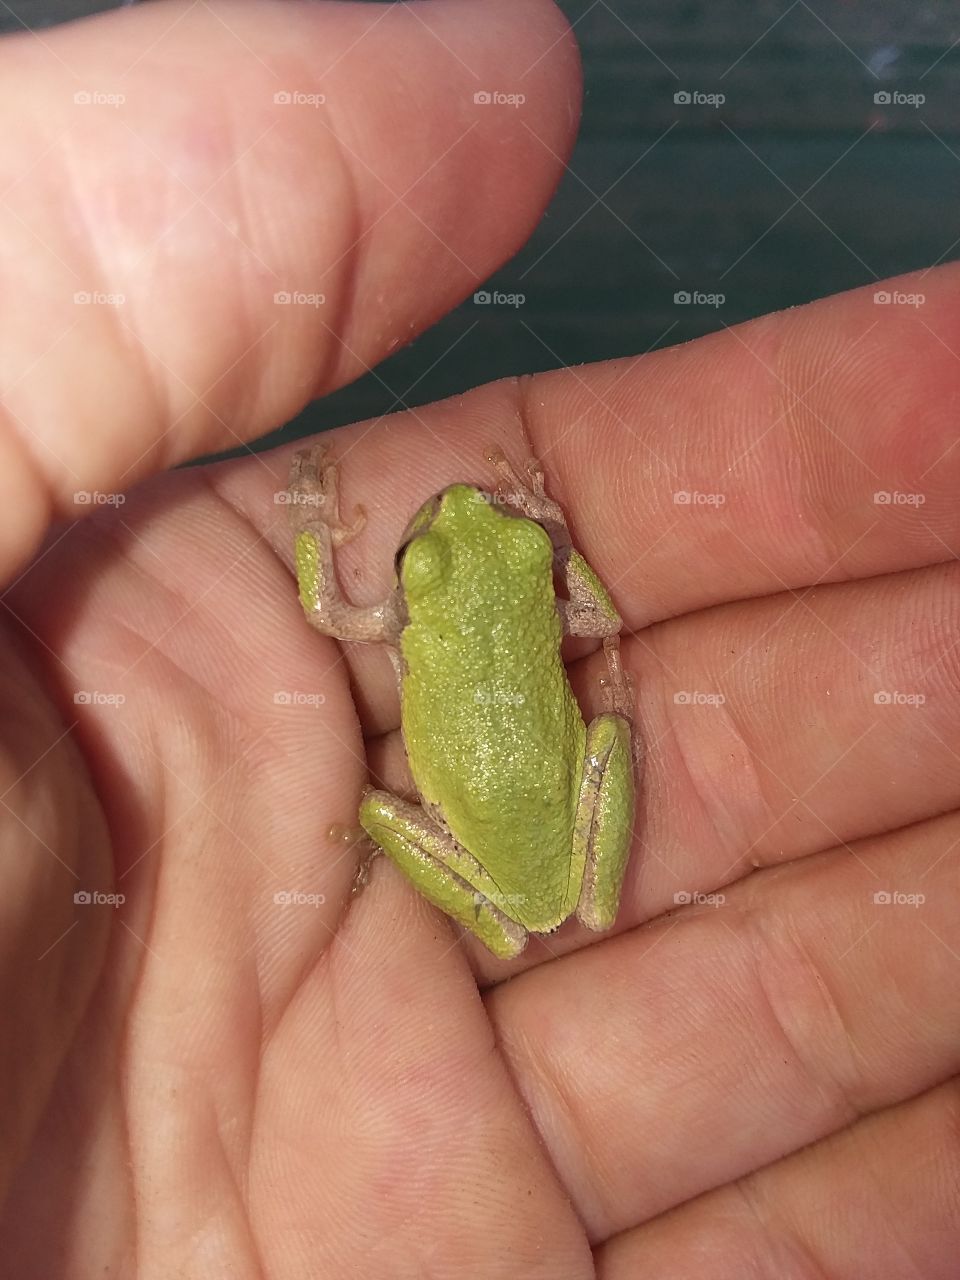 frogger!